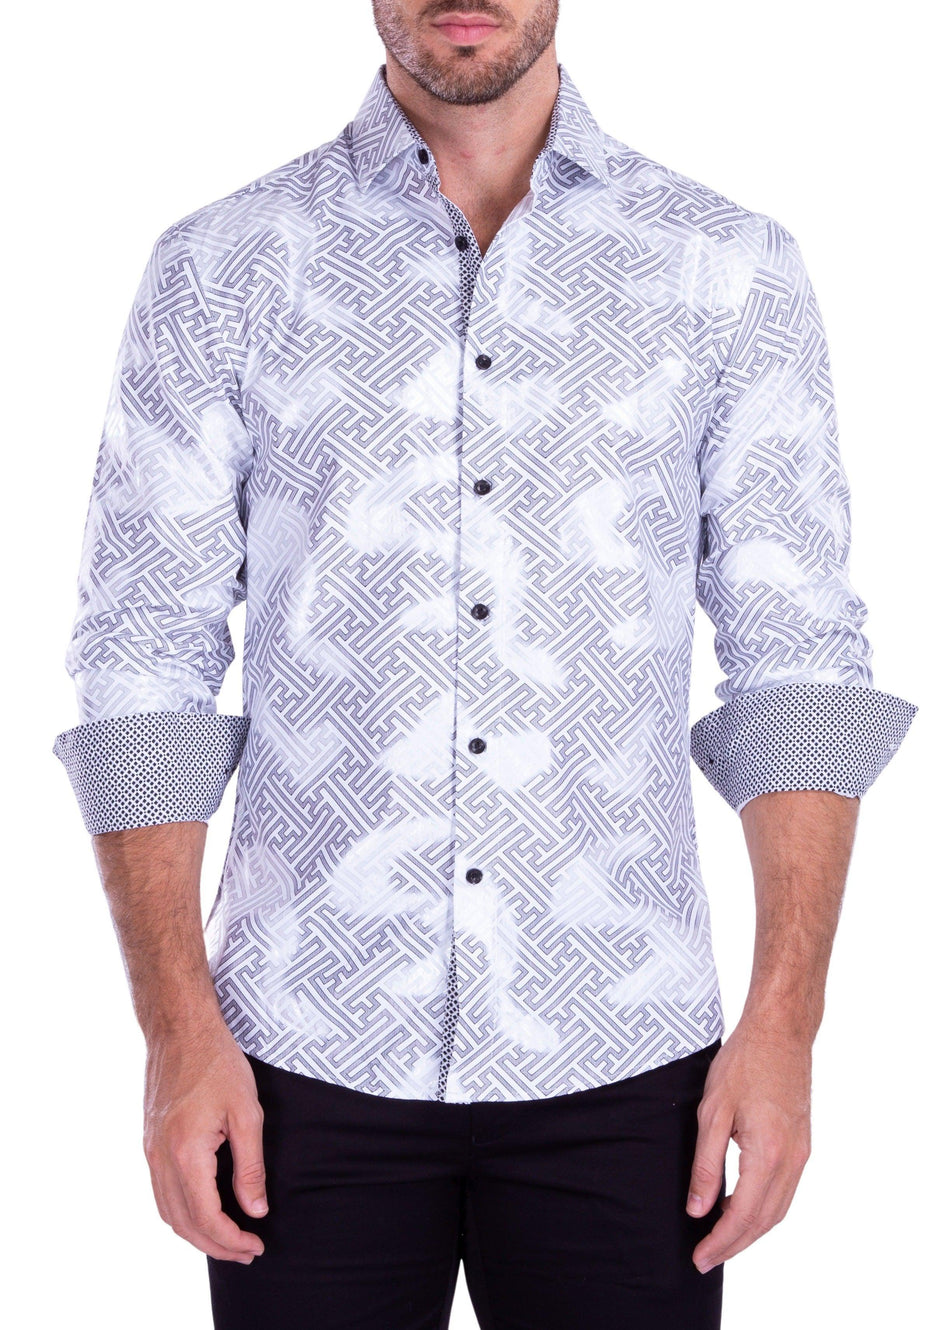 Maze Pattern Metallic Accent Long Sleeve Dress Shirt White